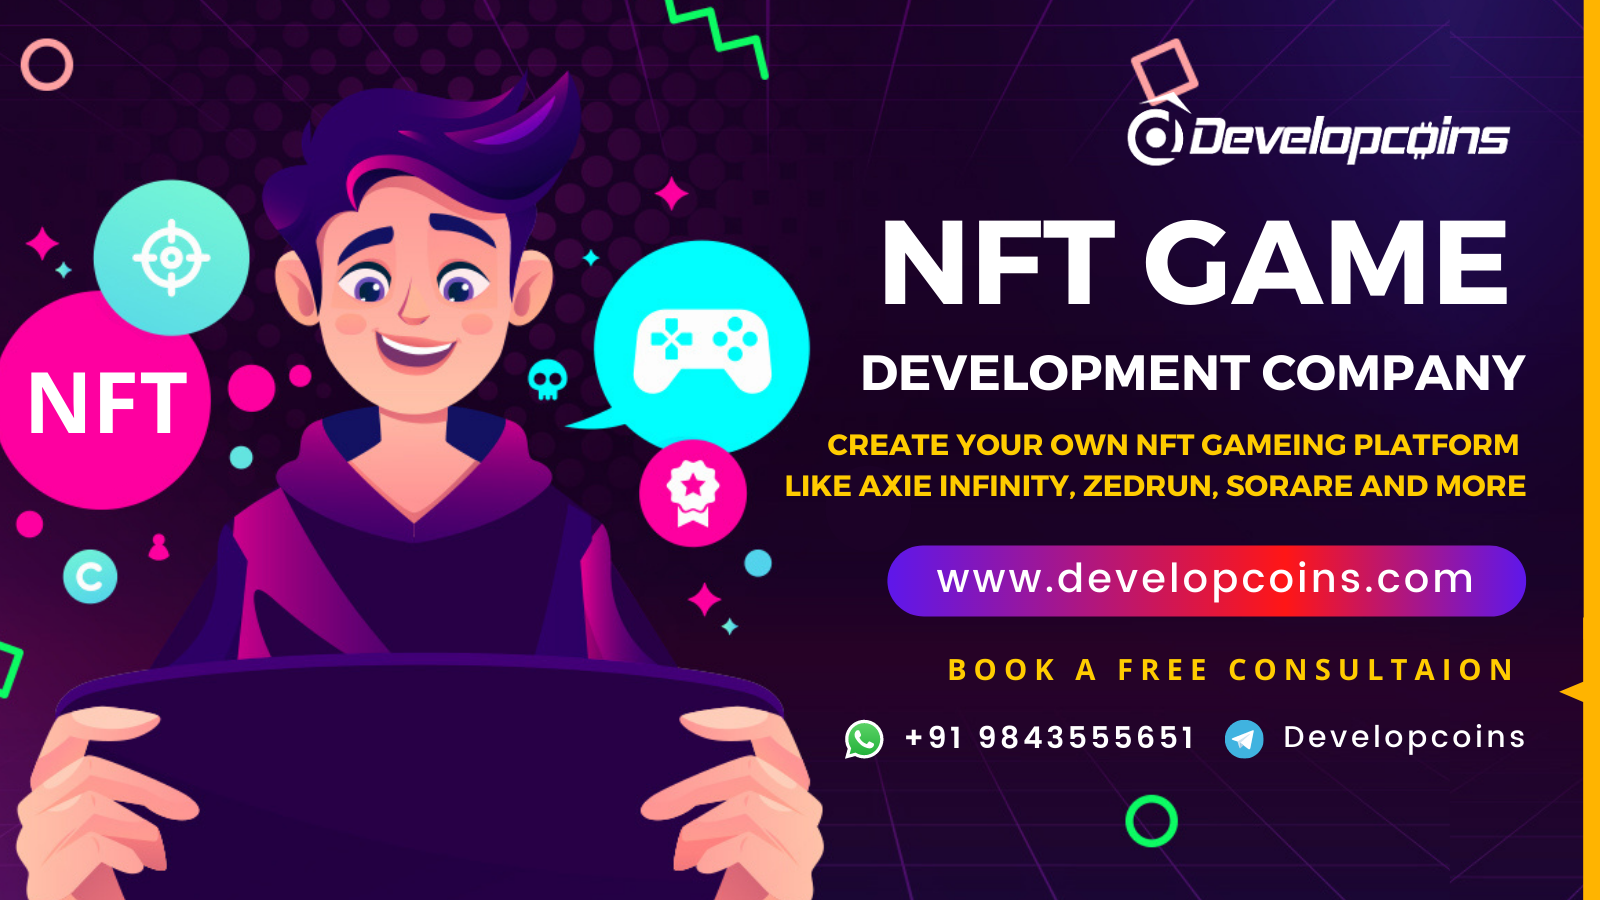 NFT Gaming Platform Development Company | NFT Game Development Services